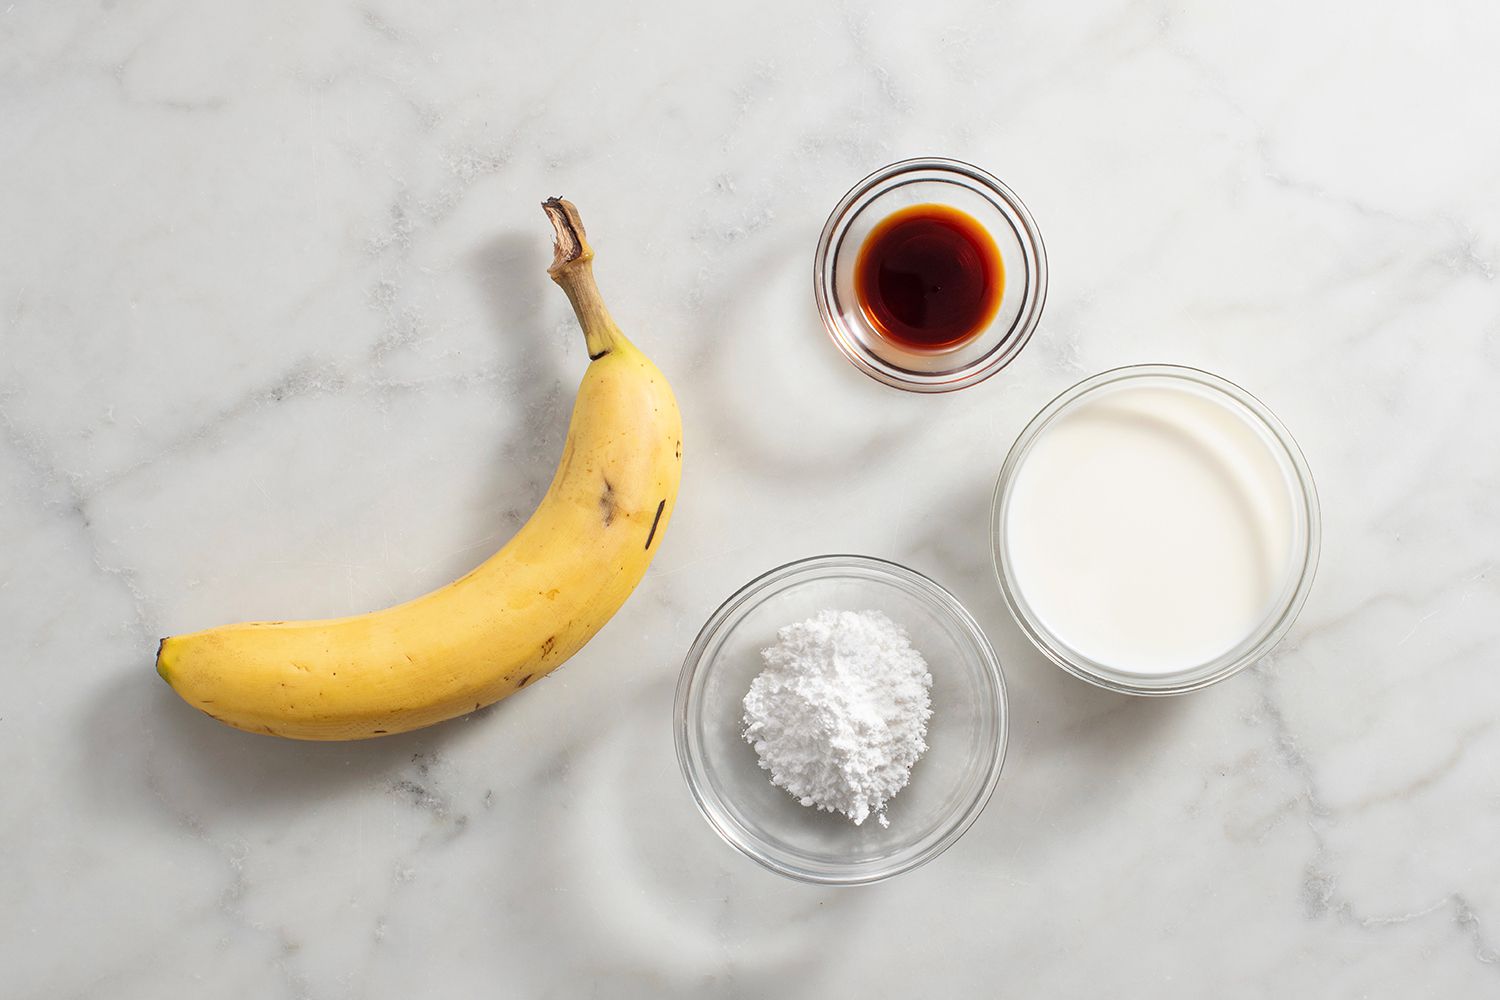 Ingredients to make banana popsicles